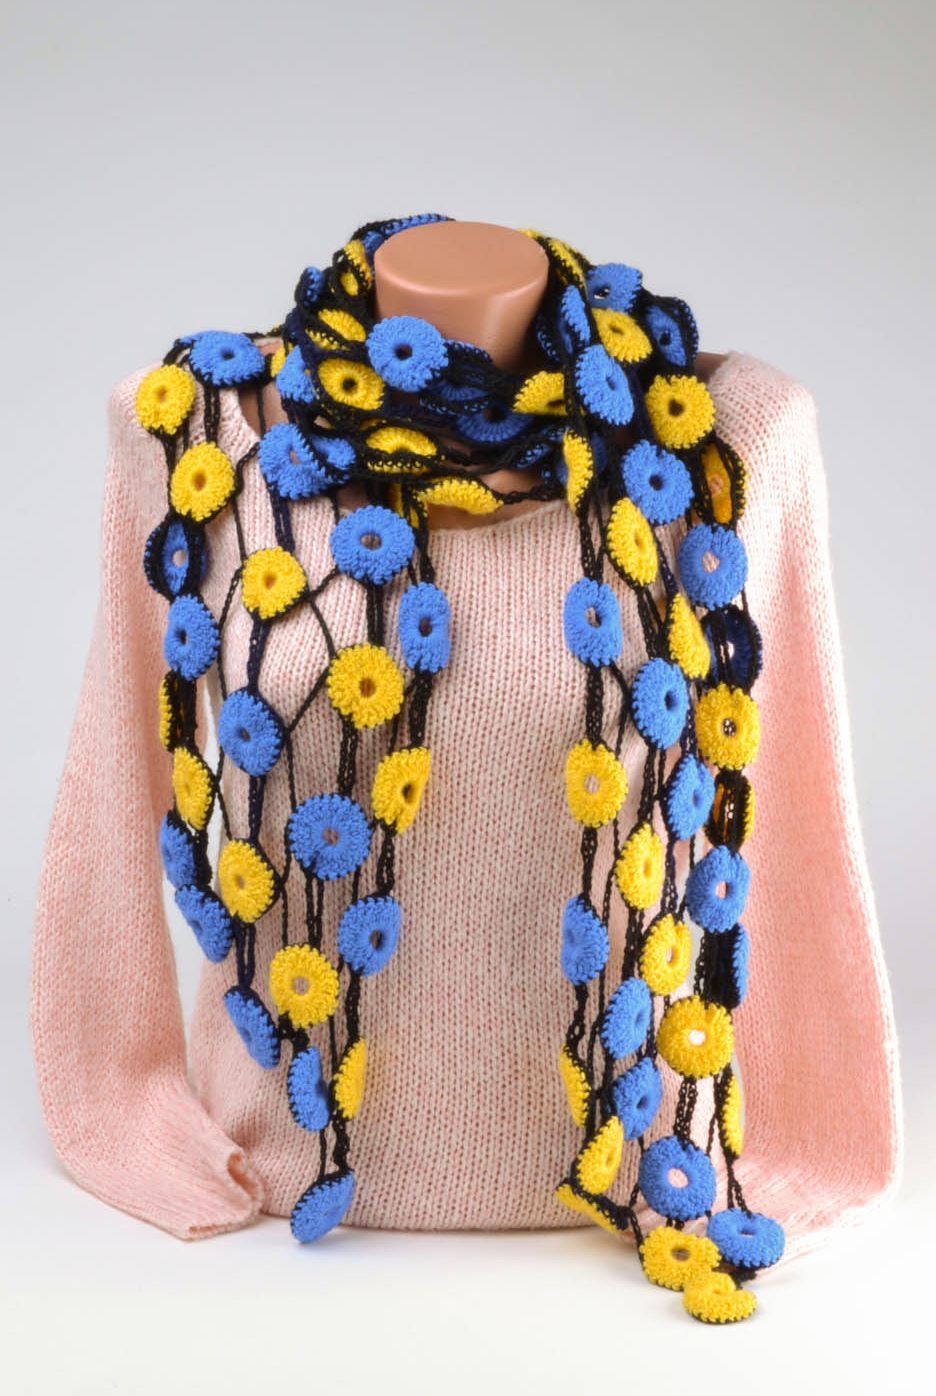 Lace crochet scarf photo 1